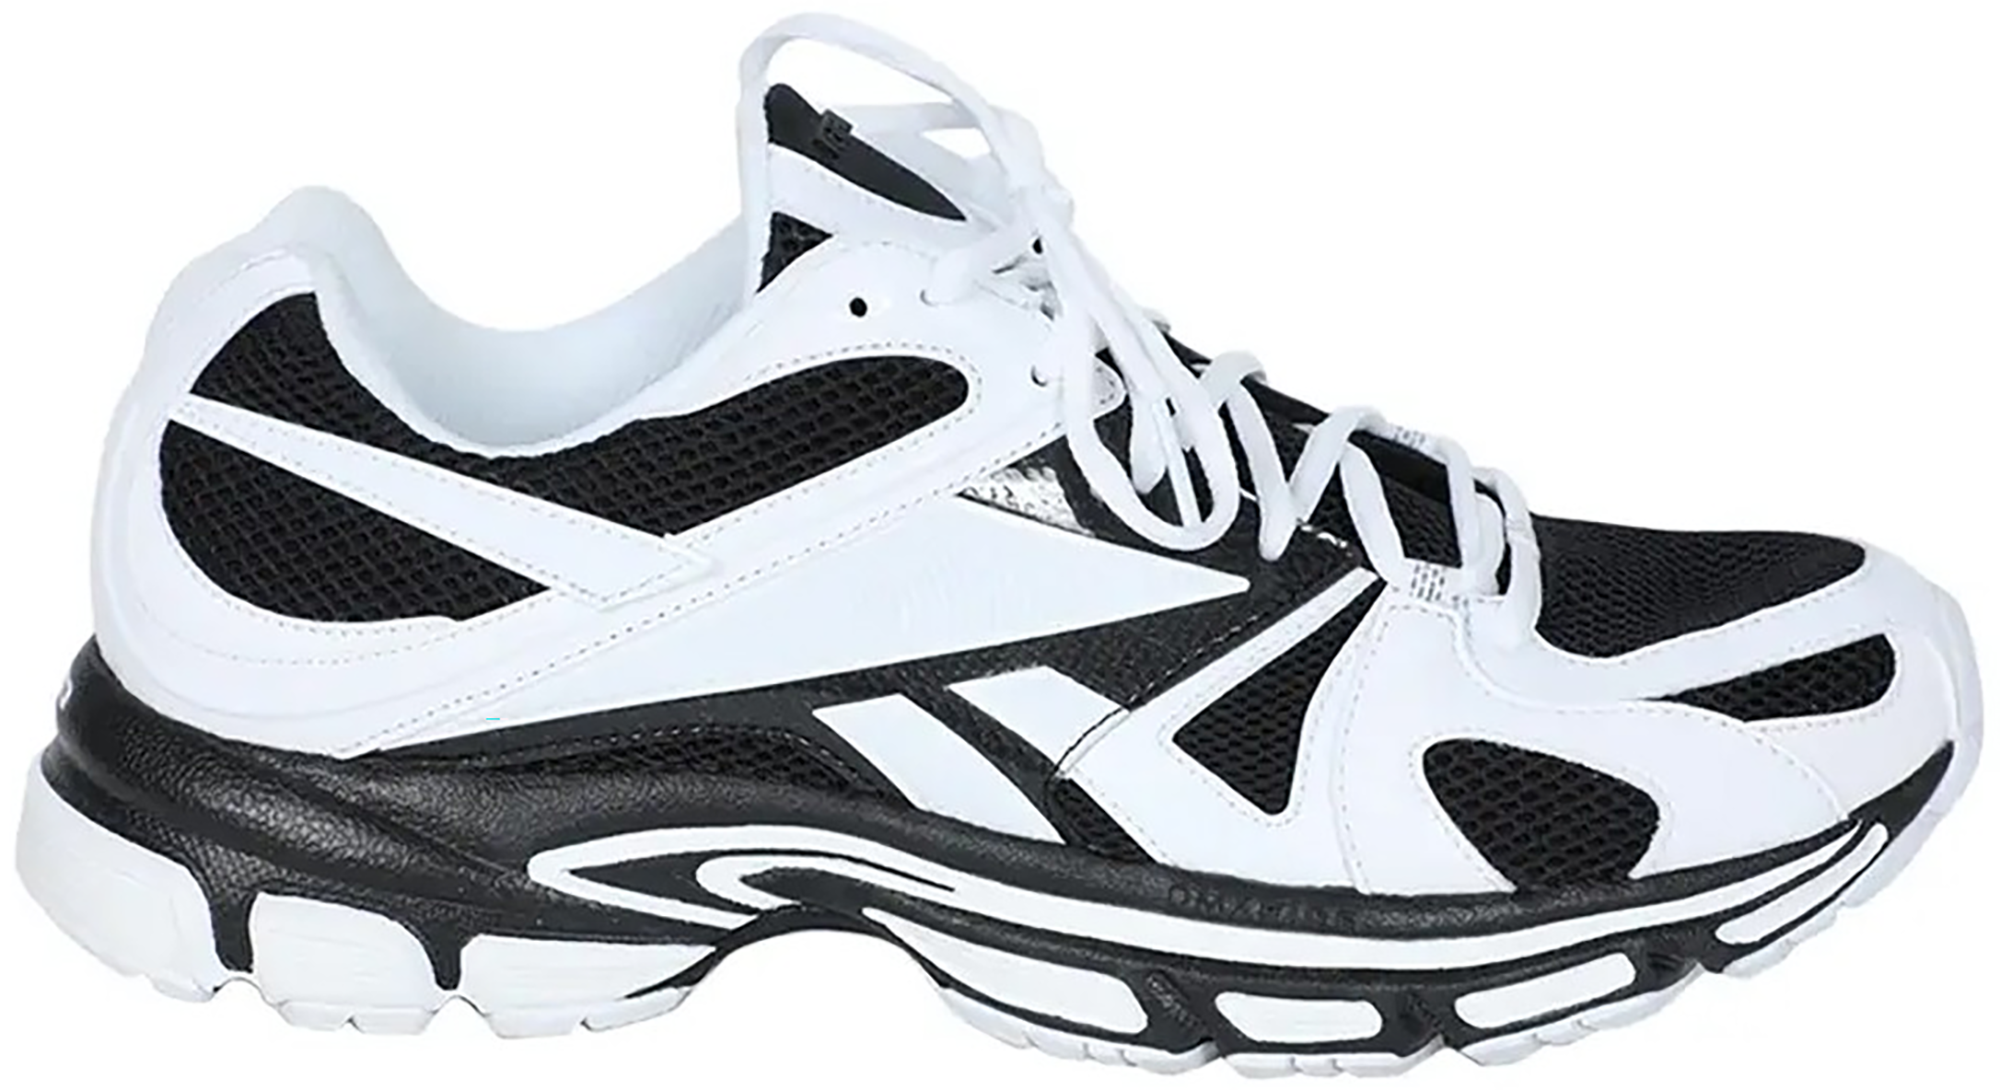 Reebok Spike Runner 200 Vetements Black White Men's - Sneakers - US